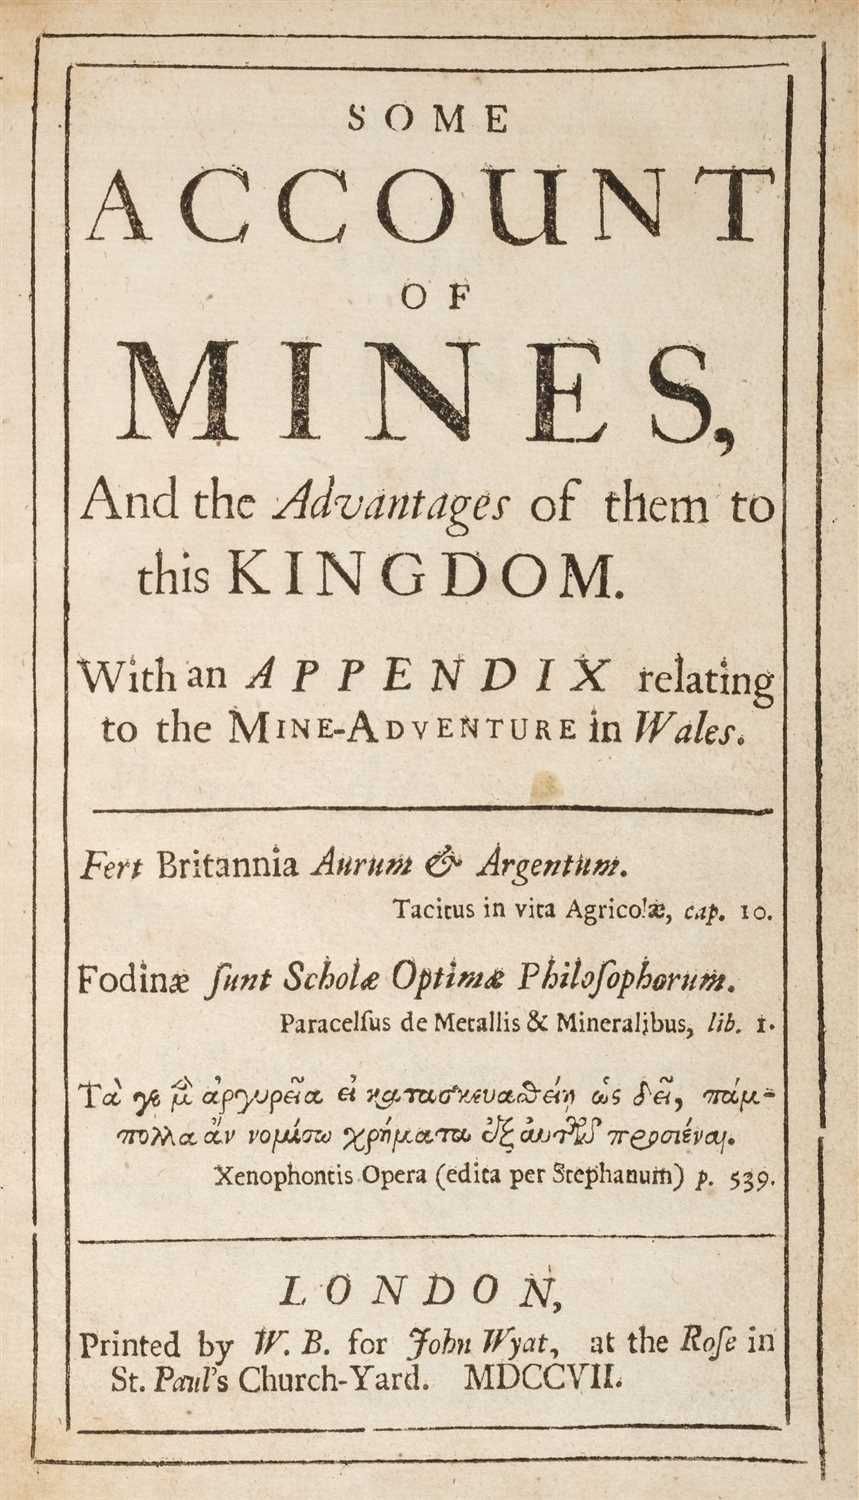 Lot 128 - Heton (Thomas). Some Account of Mines, 1707